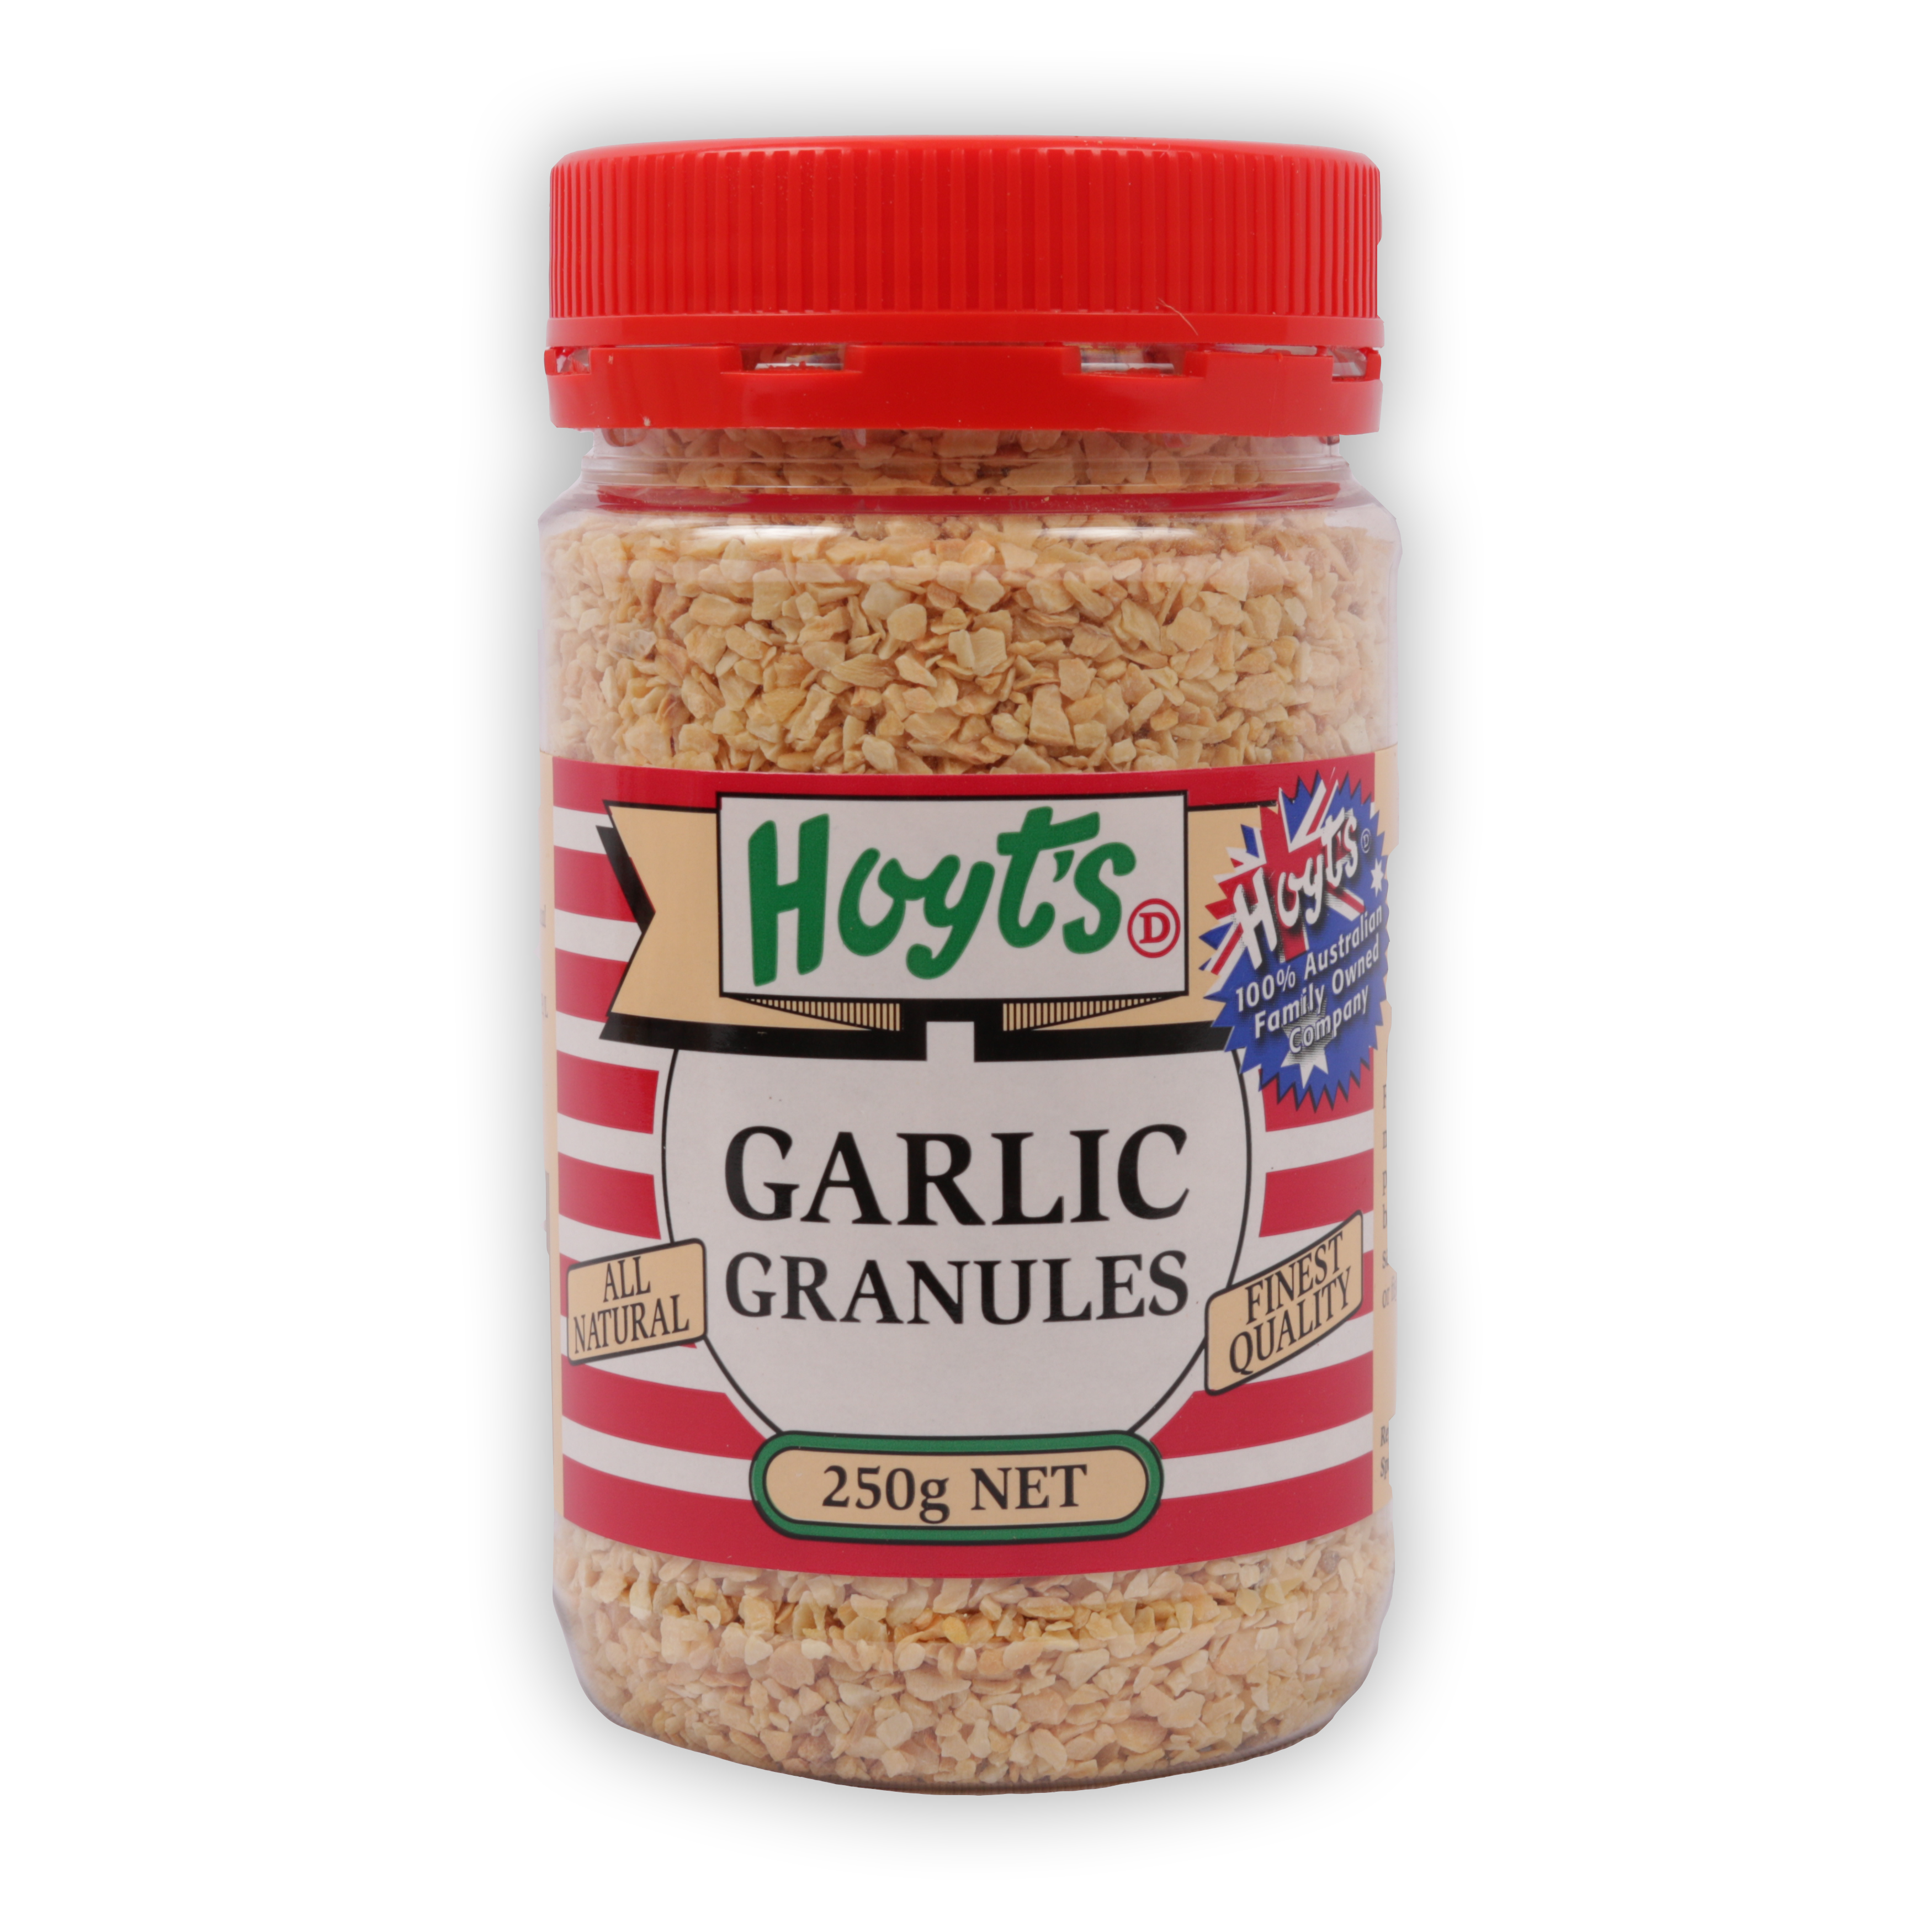 Hoyts Garlic Granules 250g